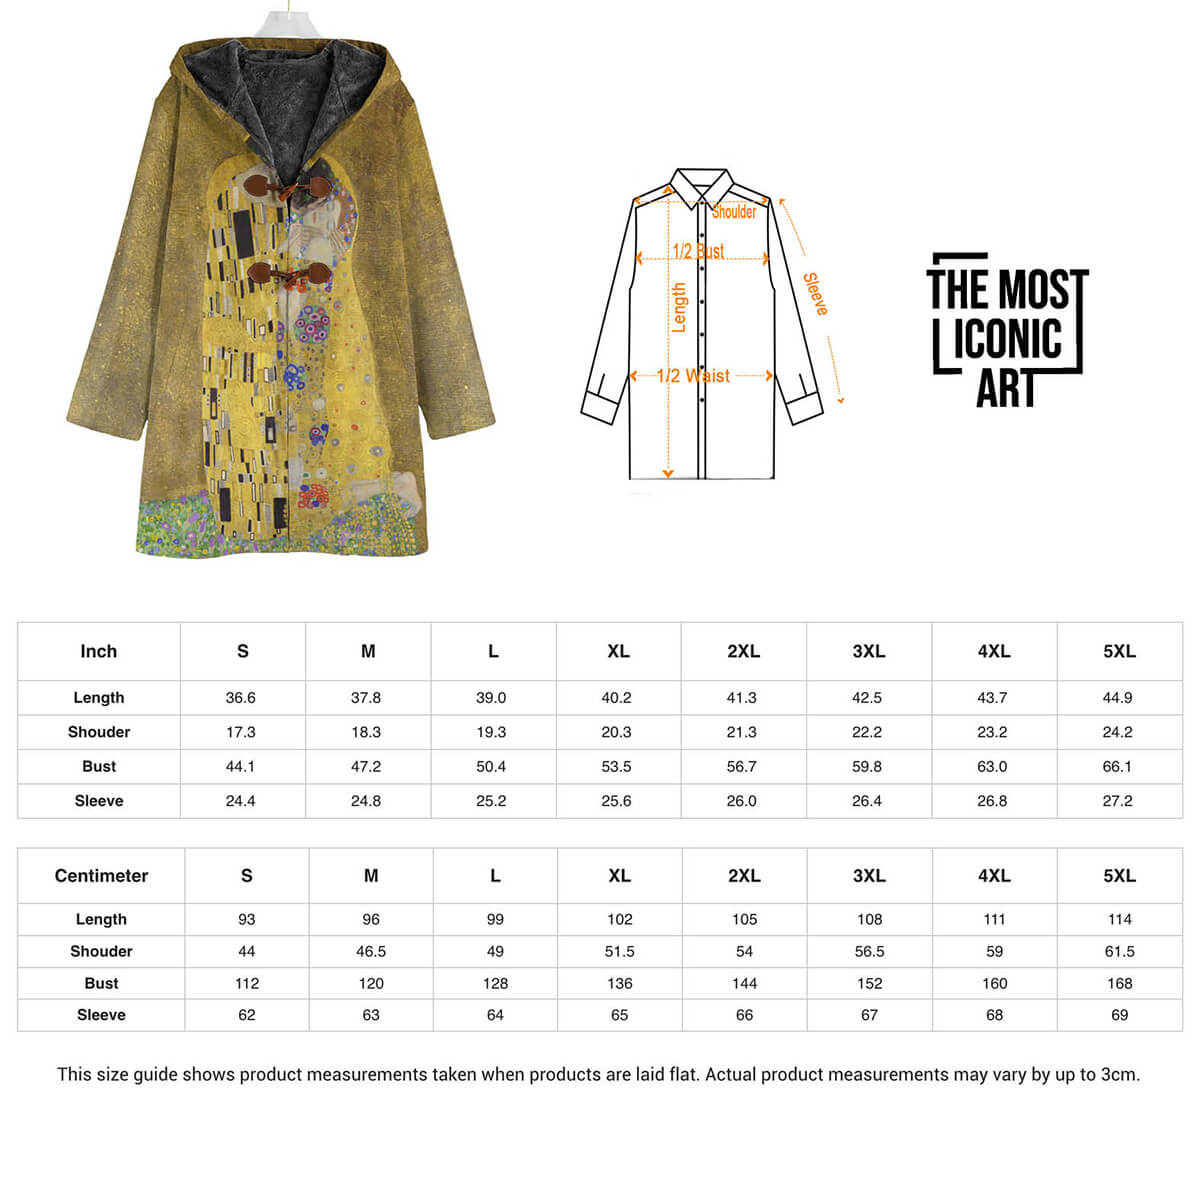 Men's Stylish Winter Fashion - Klimt's The Kiss